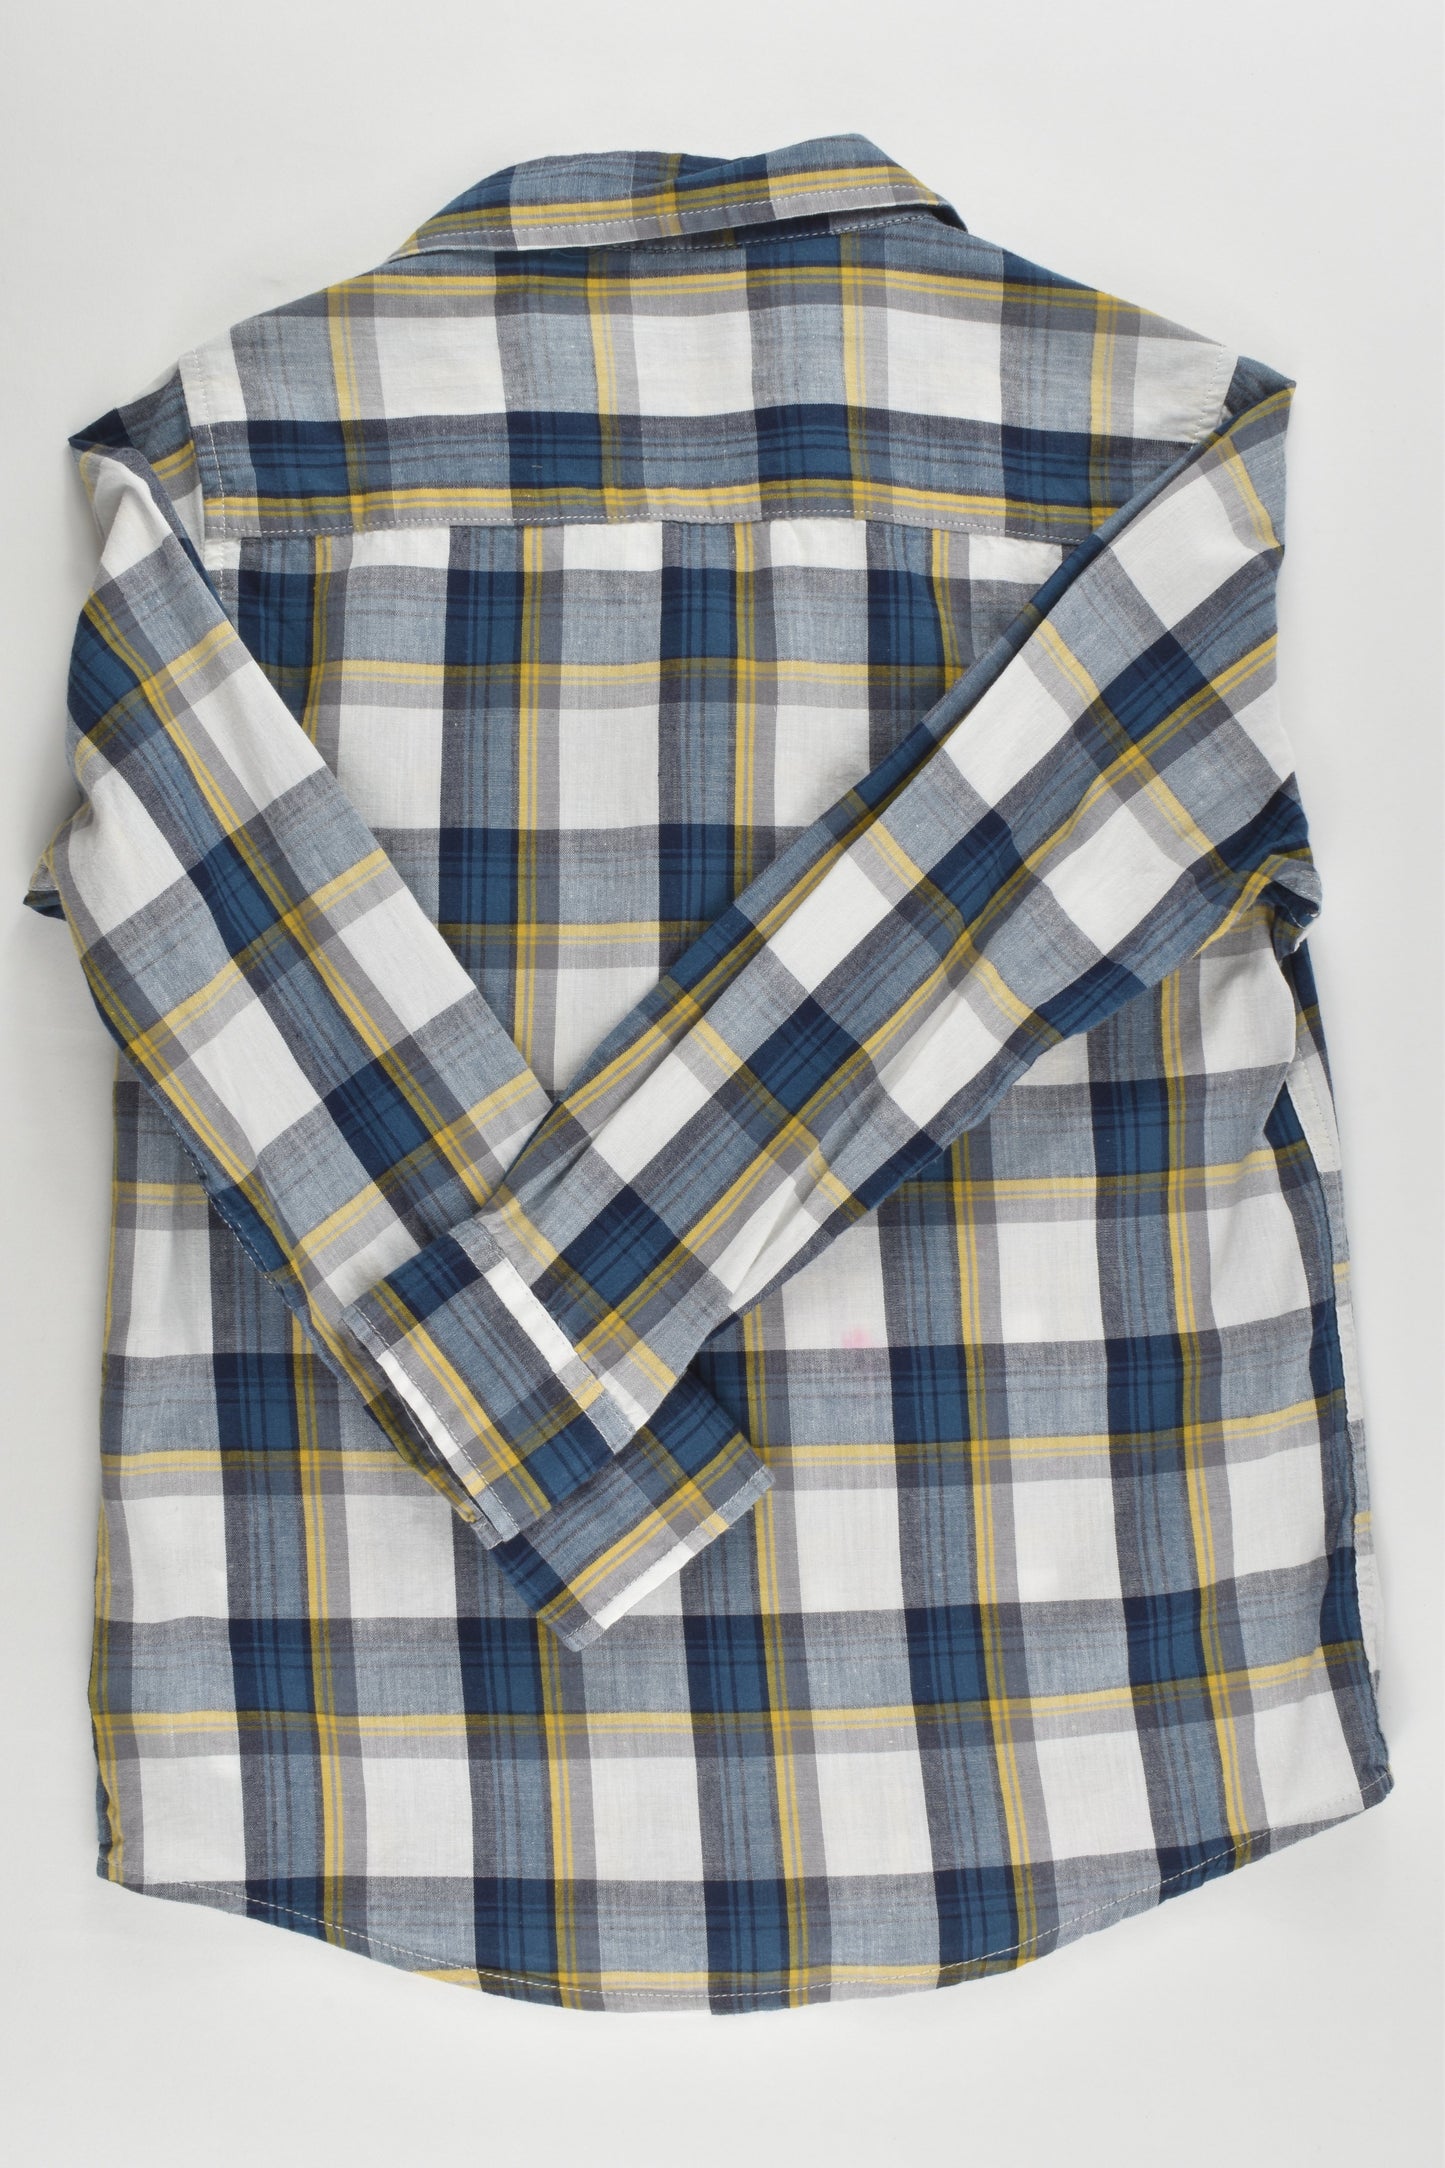 Zara Size 5/6 (116 cm) Checked Collared Shirt